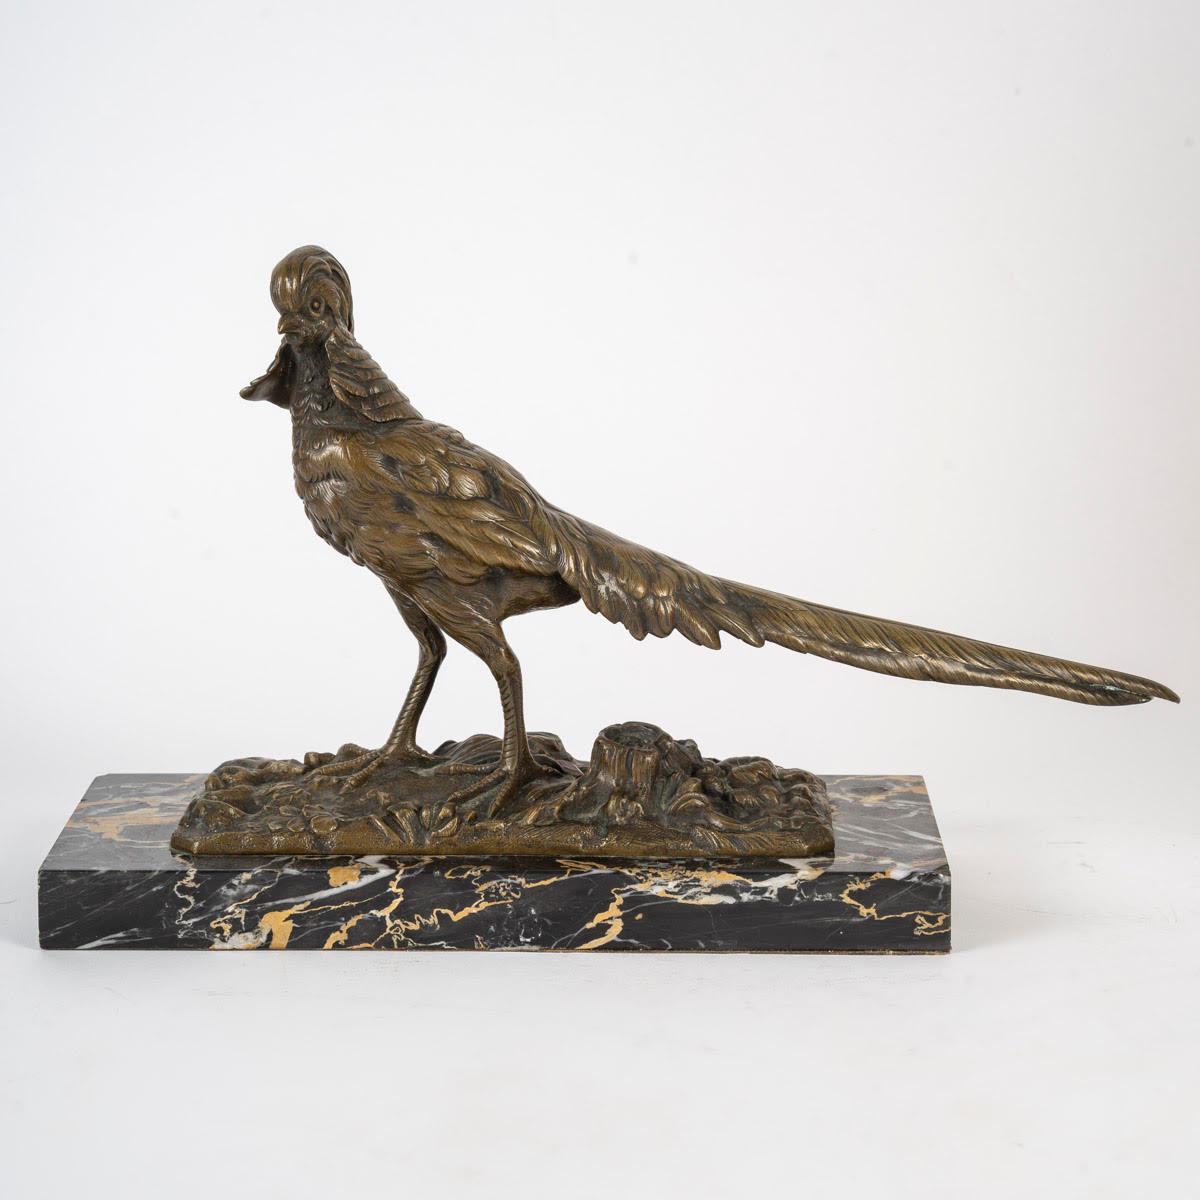 Sculpture in Patinated Bronze, Animal Statue representing a Pheasant, 1920-1930.

Patinated bronze sculpture on marble base, 1920-1930, representing a pheasant, Napoleon III style.
H: 19cm, W: 31cm, D: 10cm